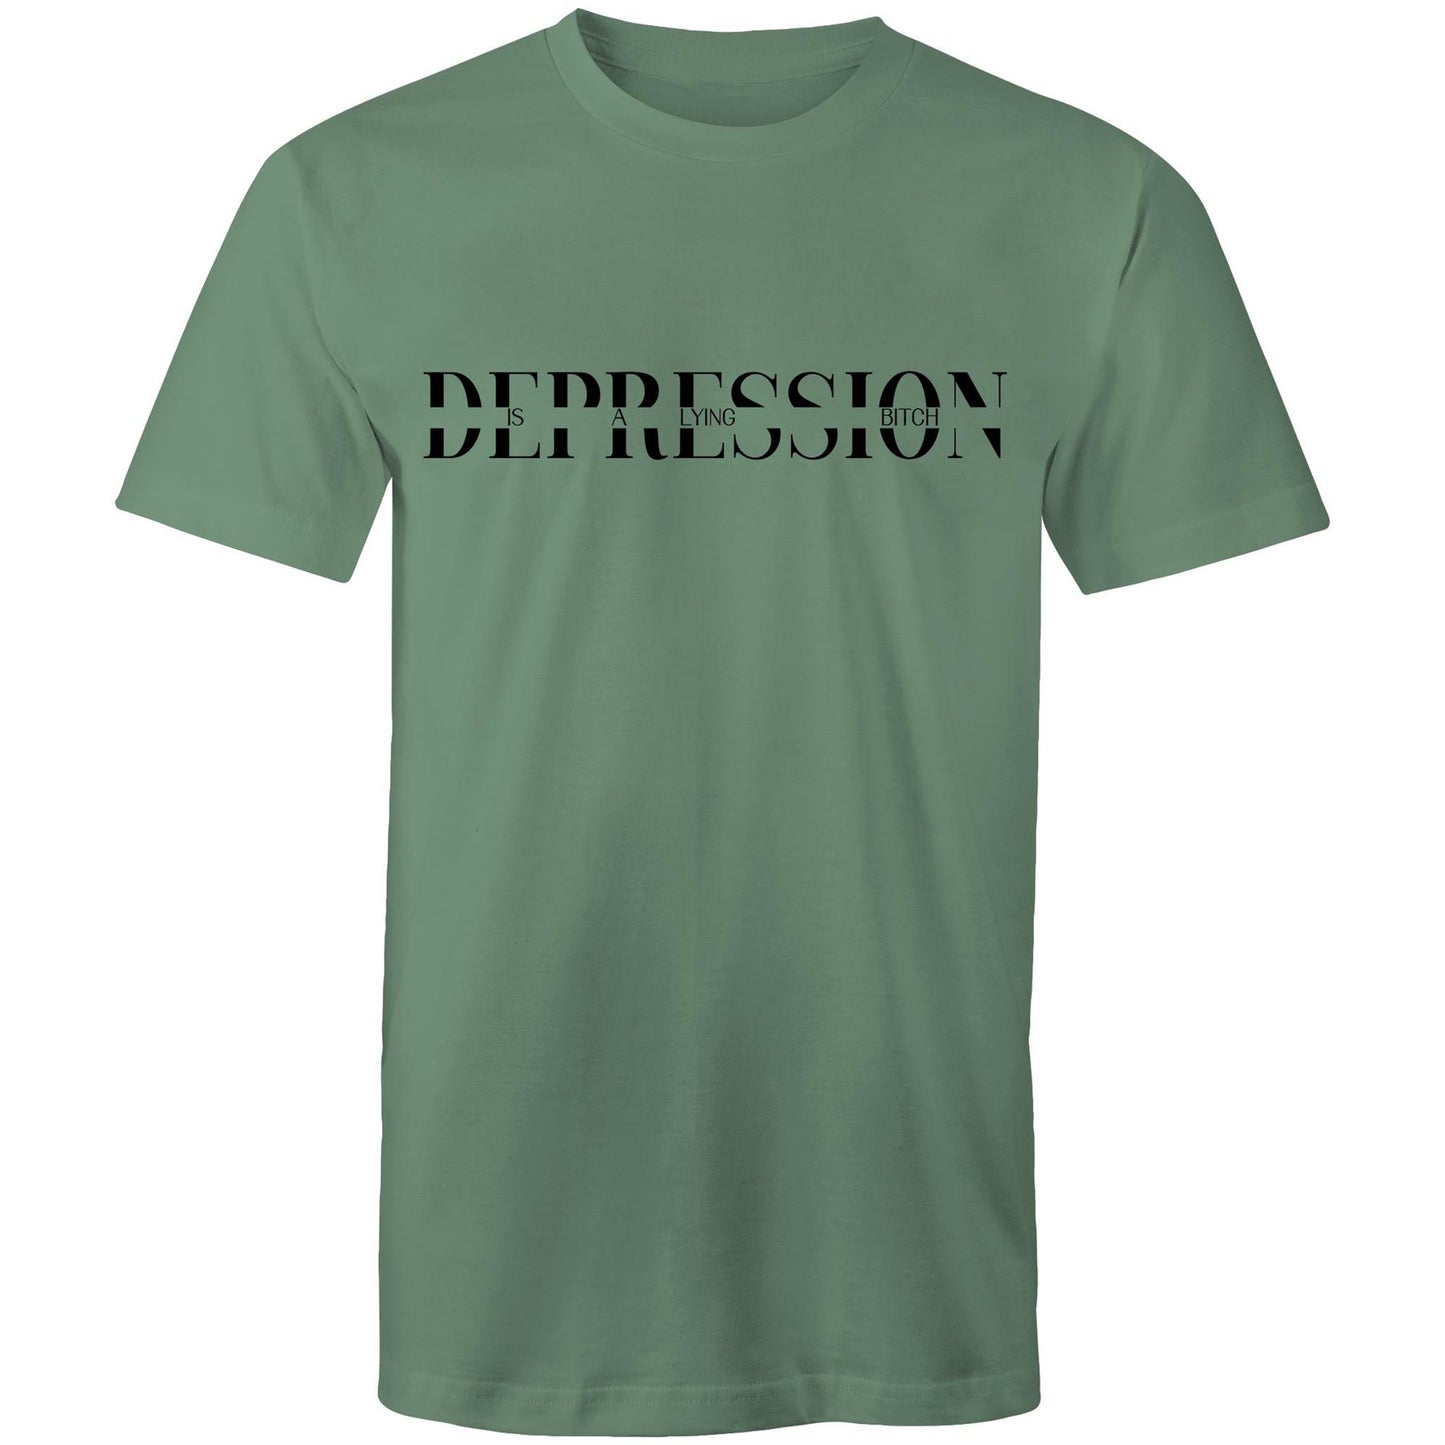 Mens T-Shirt - Depression is a lying B!tch